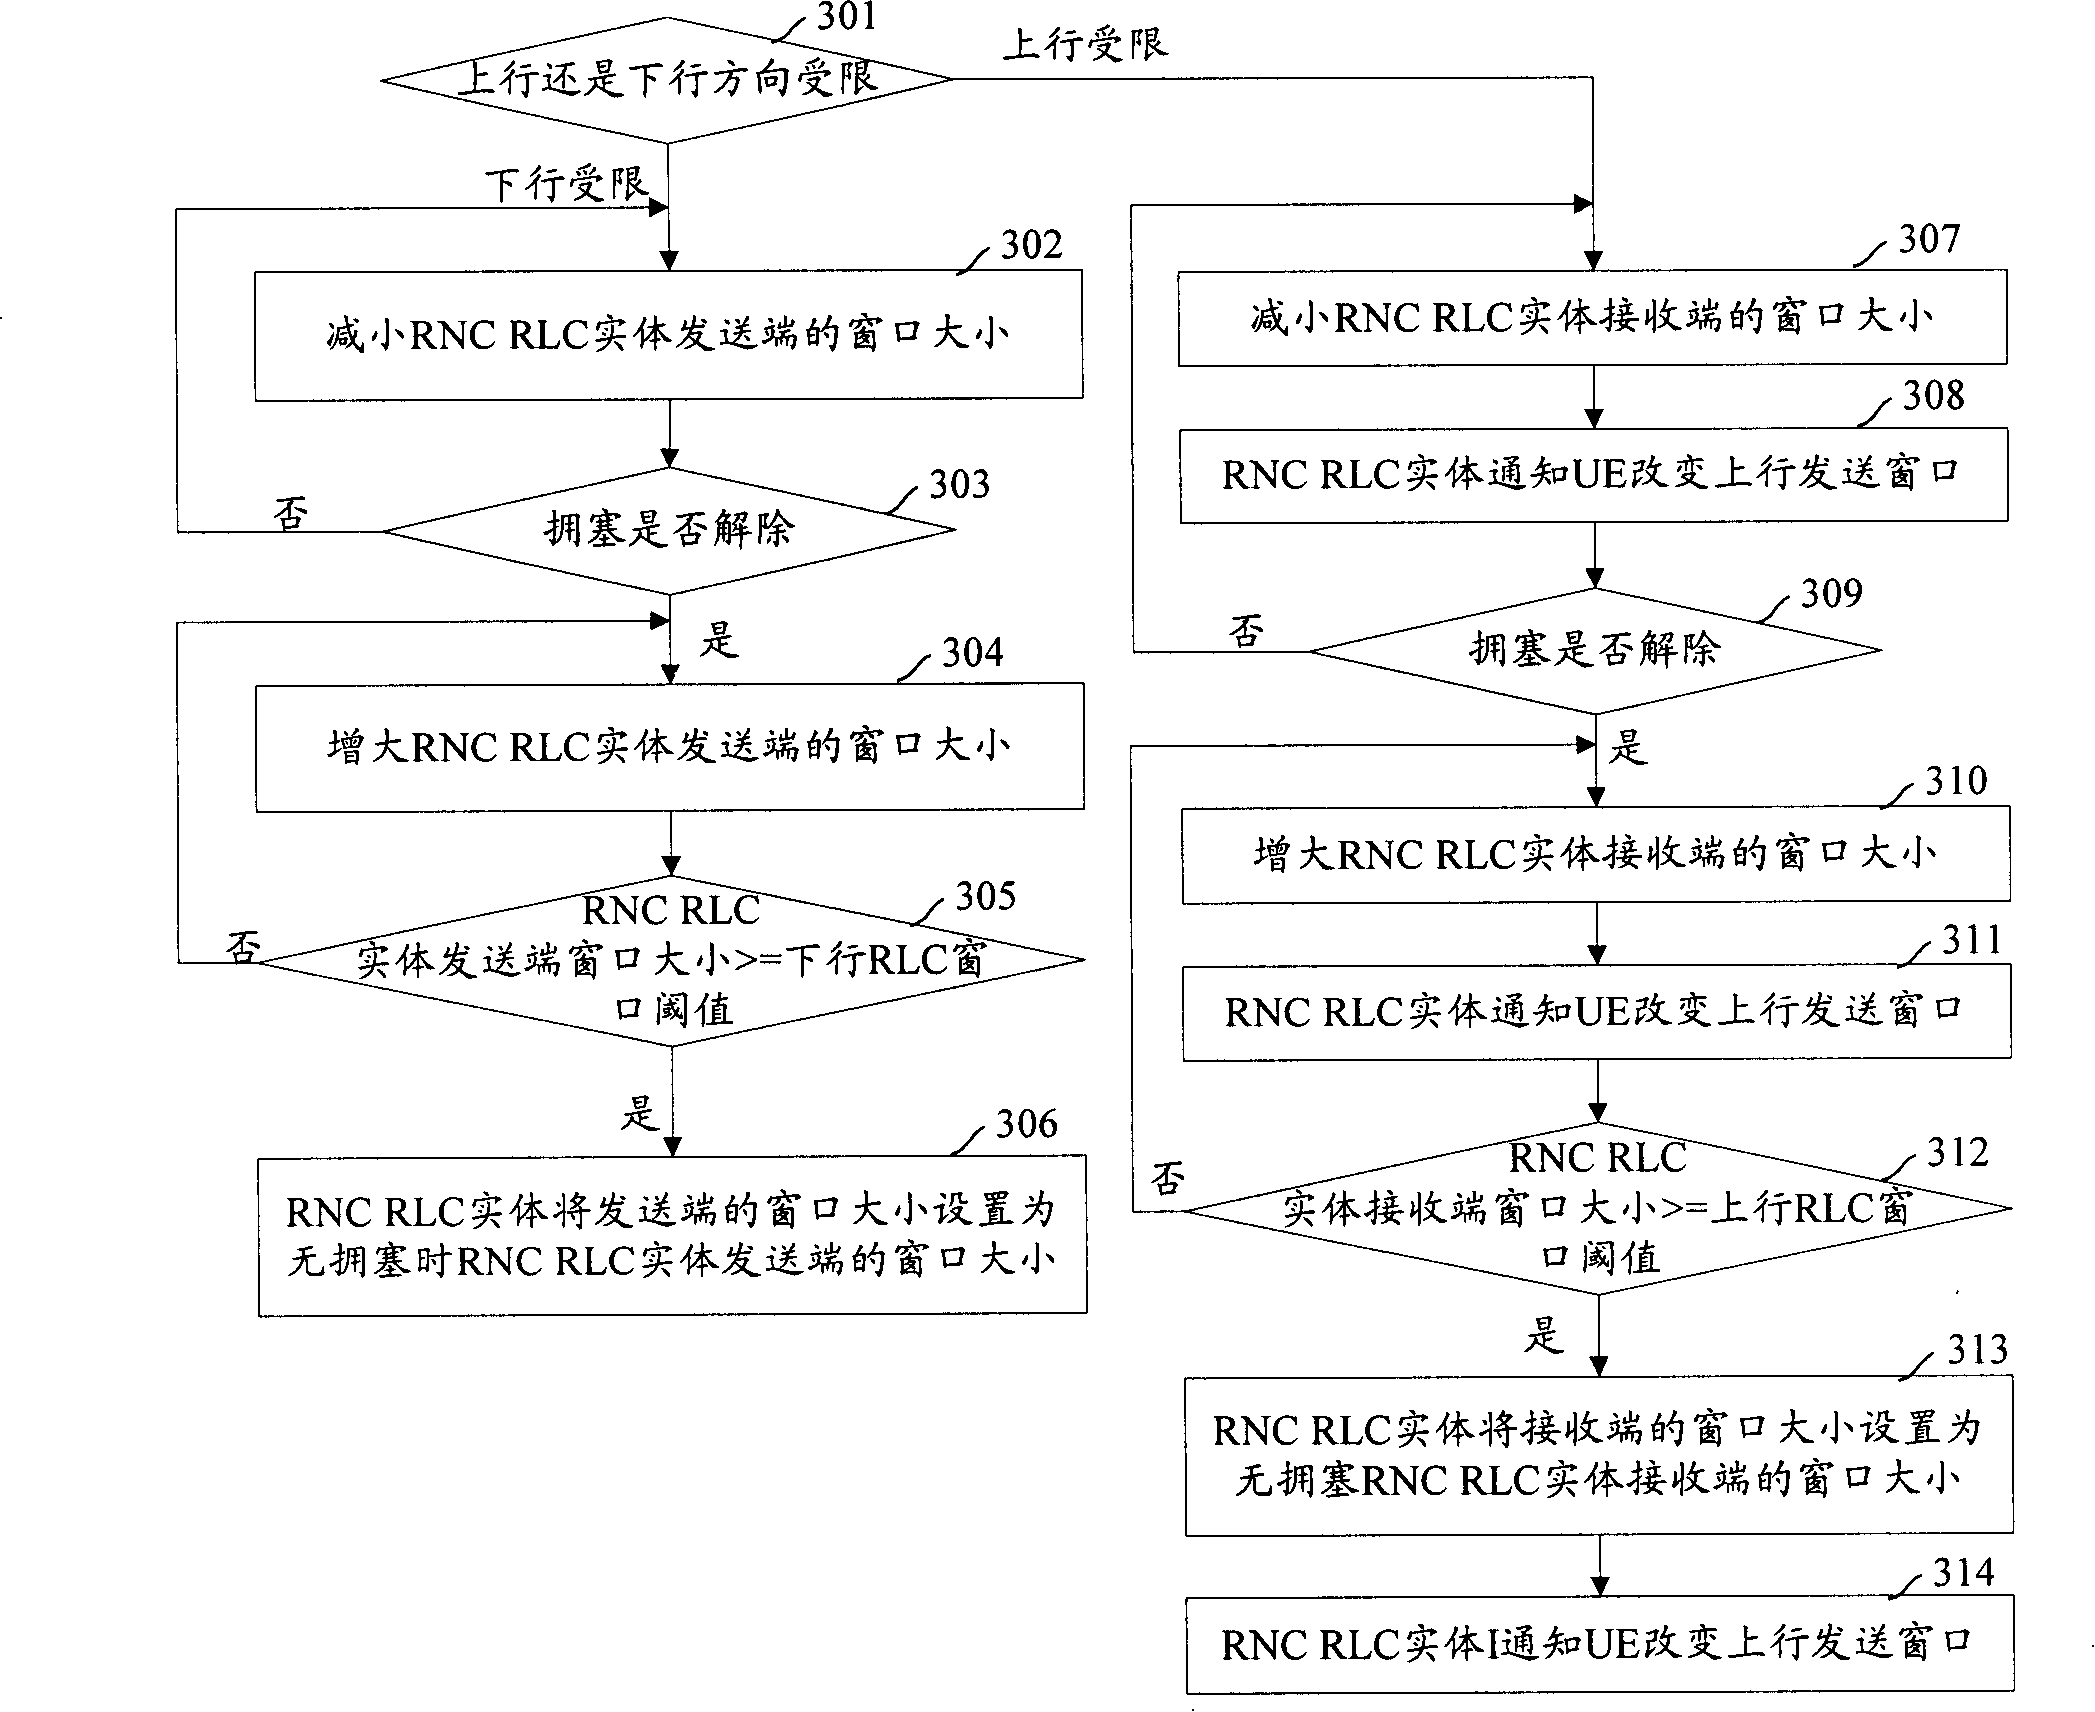 Control method of network flow